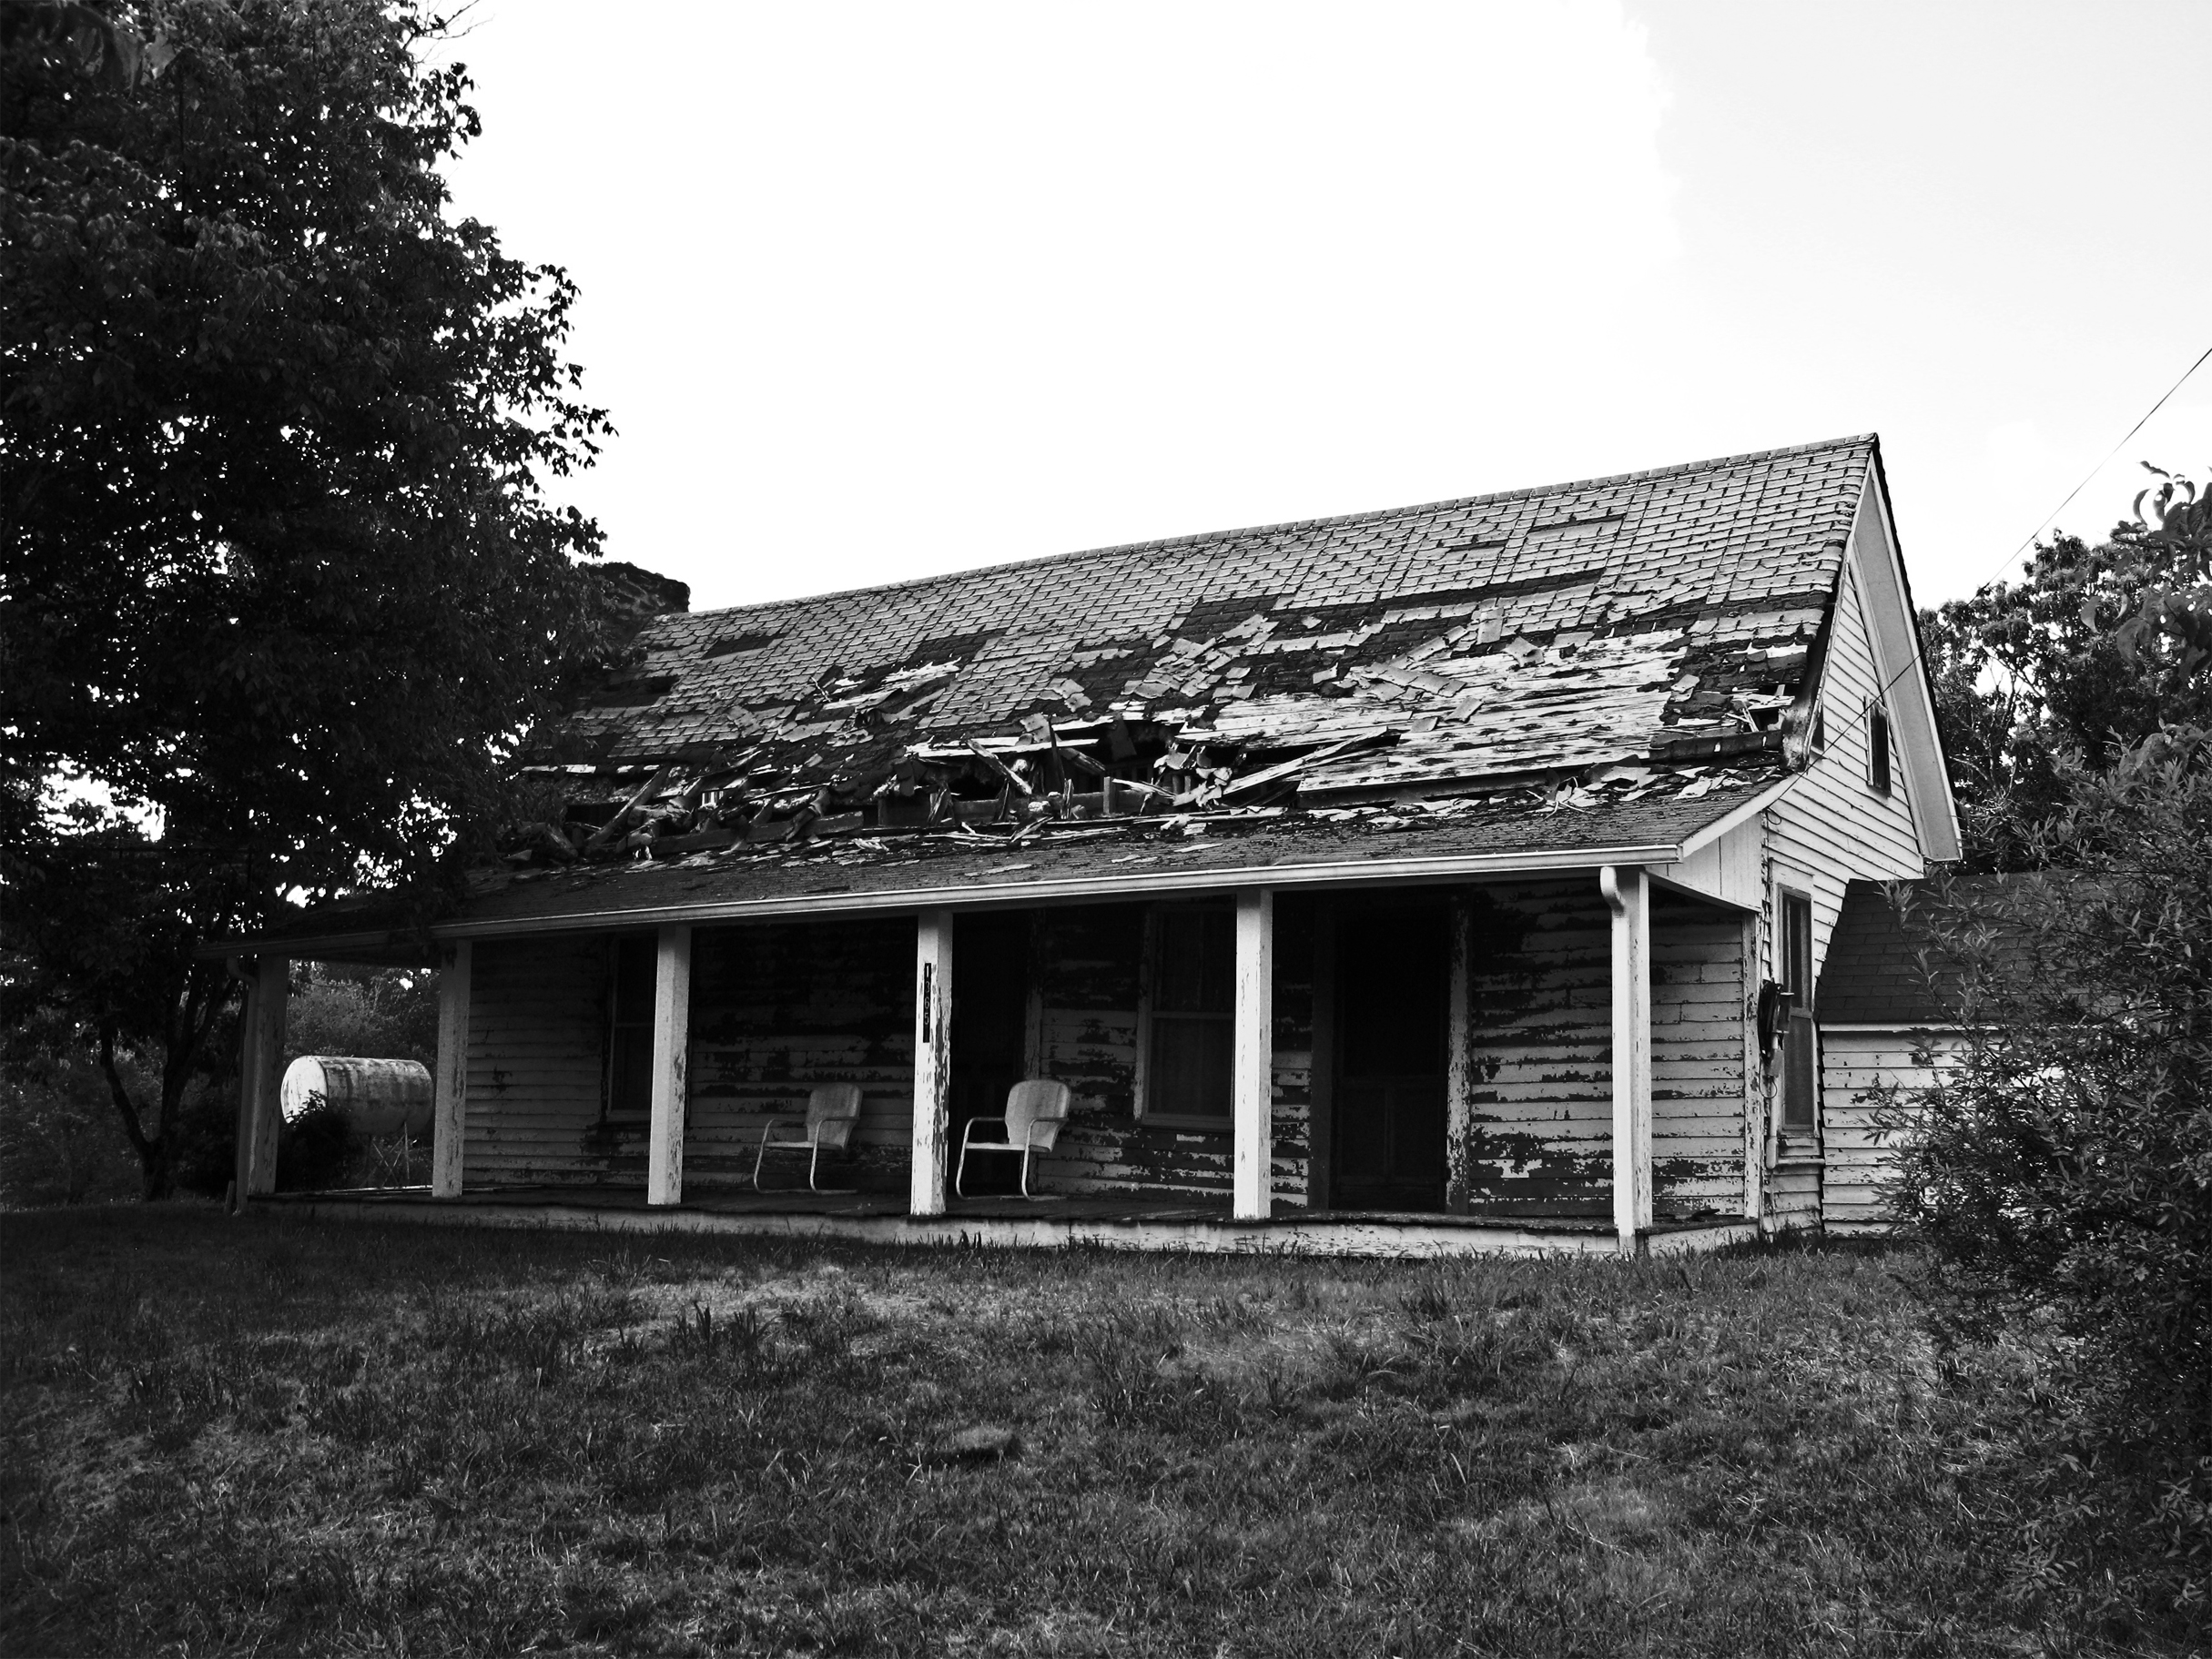    Abandoned House  , Hemptown, GA, 2013. B&amp;W HDR digital image. 